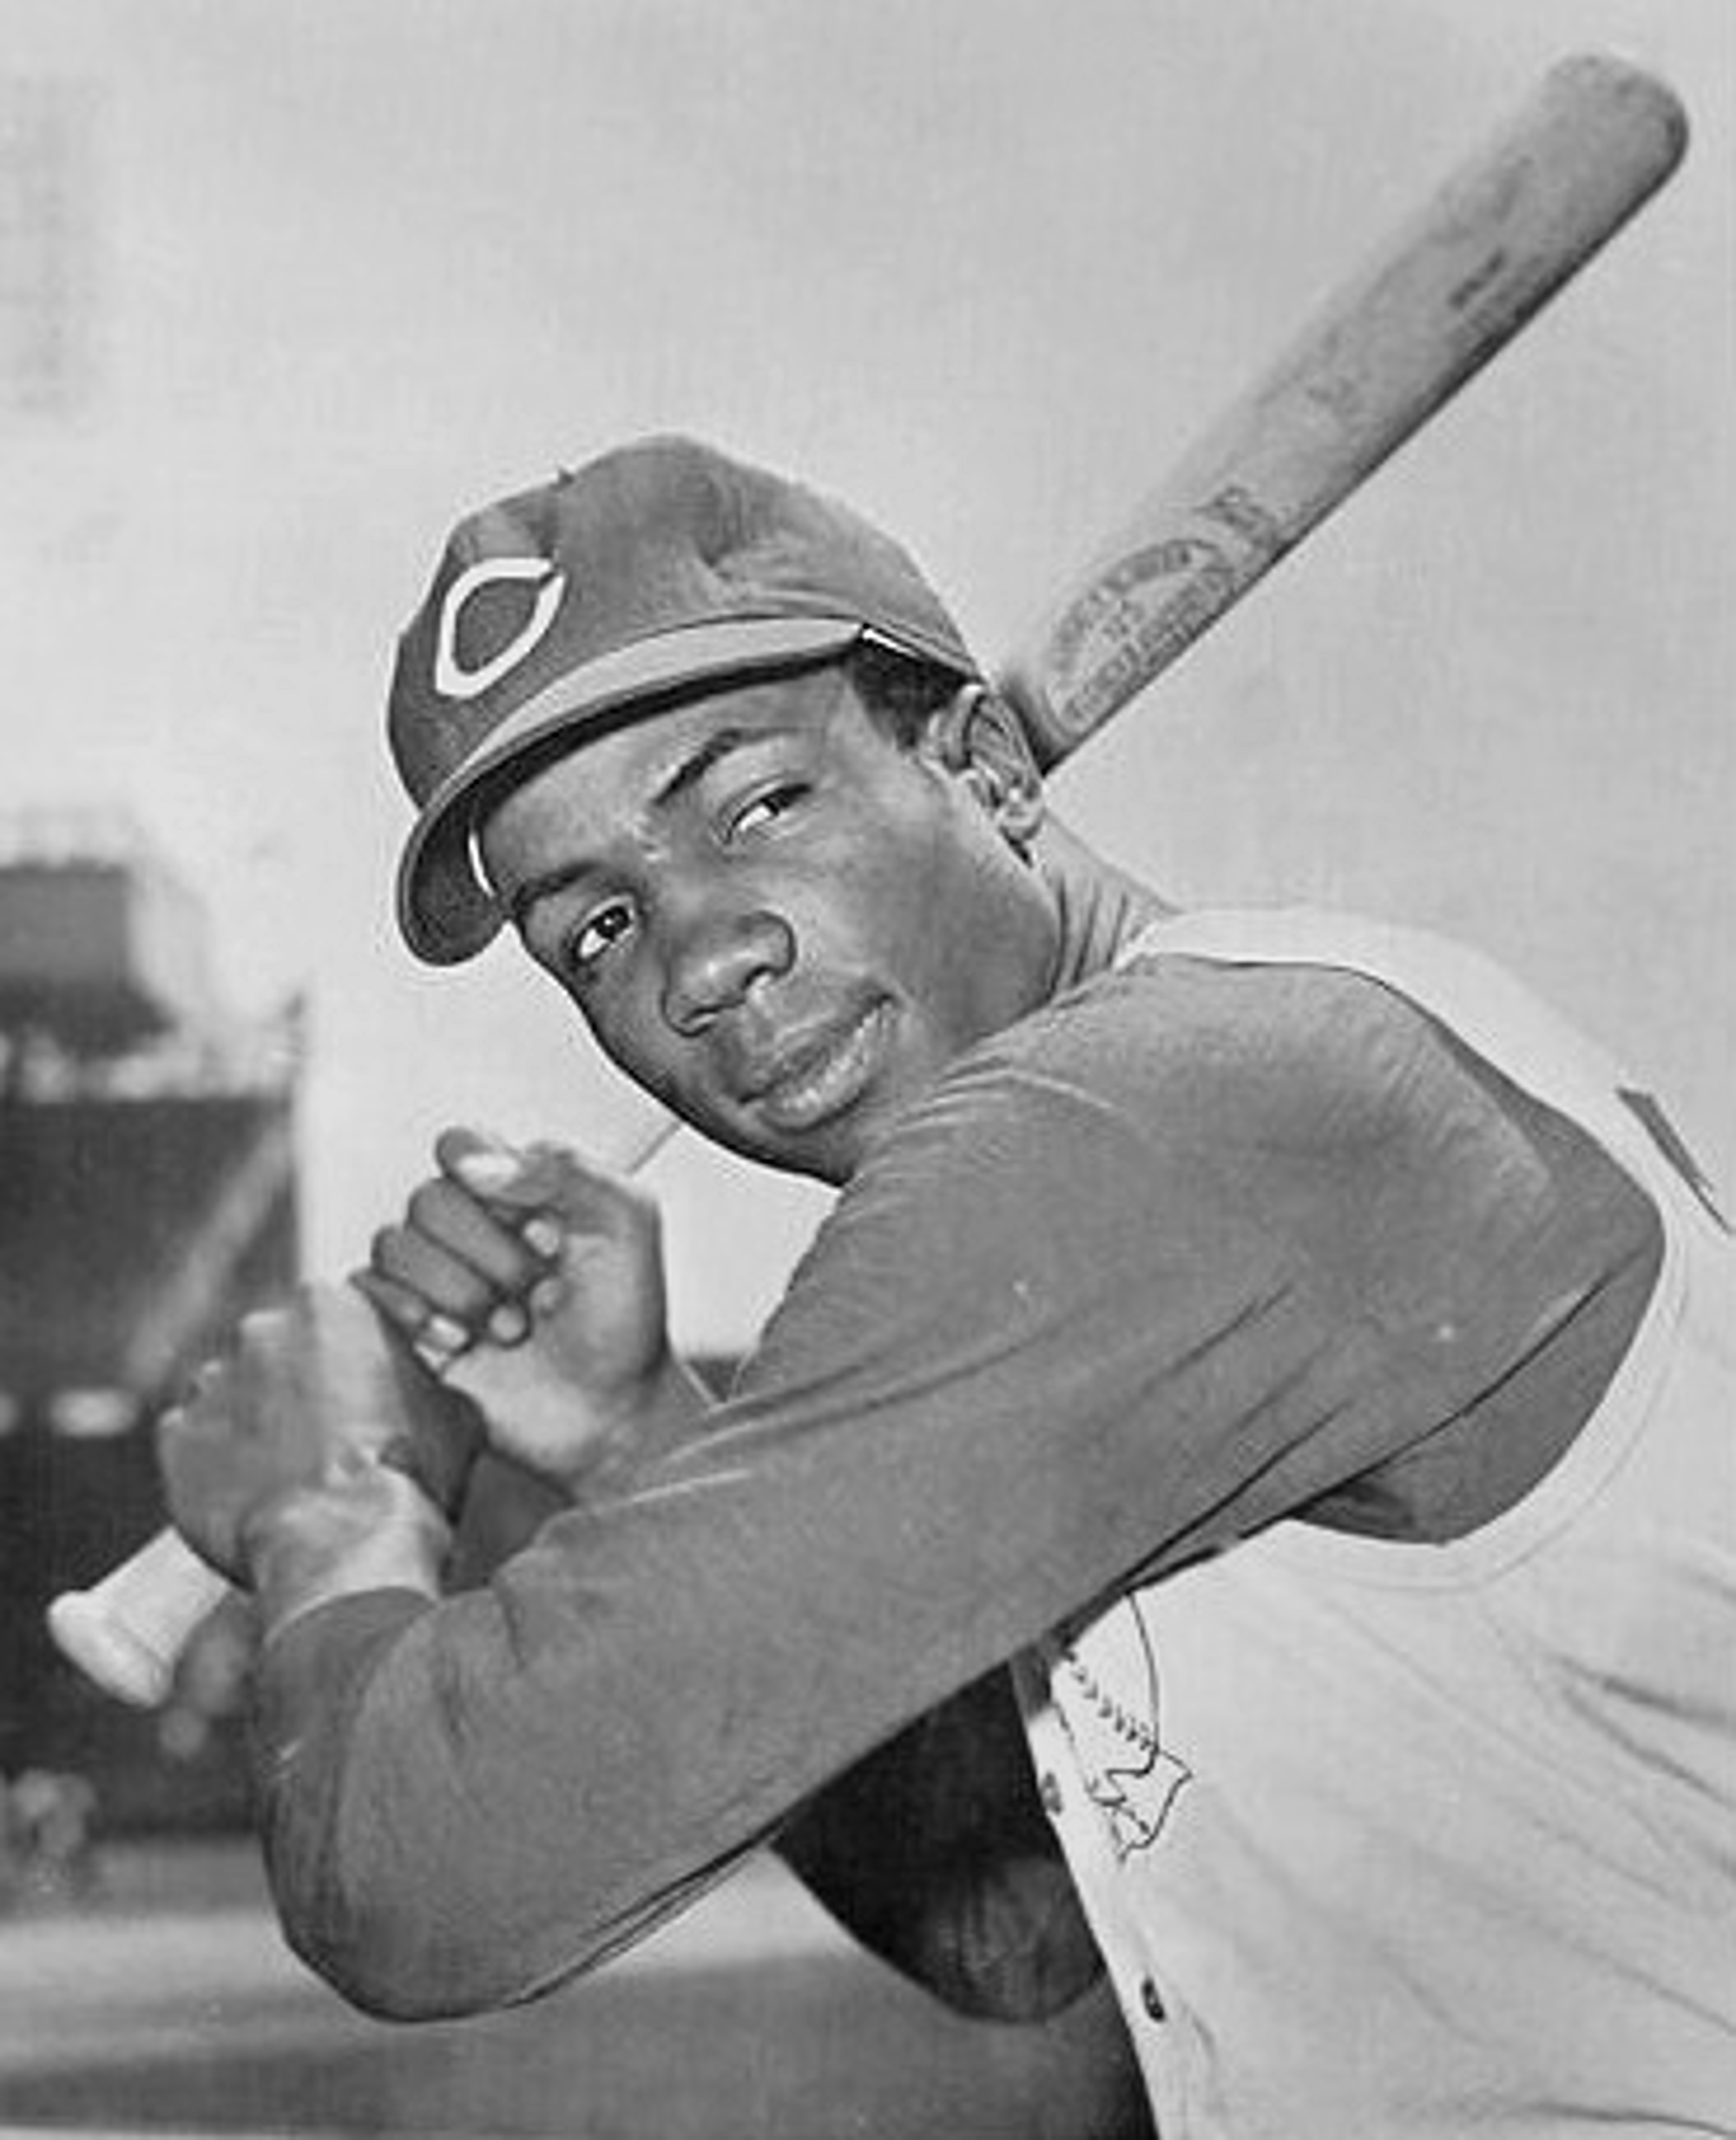 Frank Robinson 1964 Topps Baseball Card #260